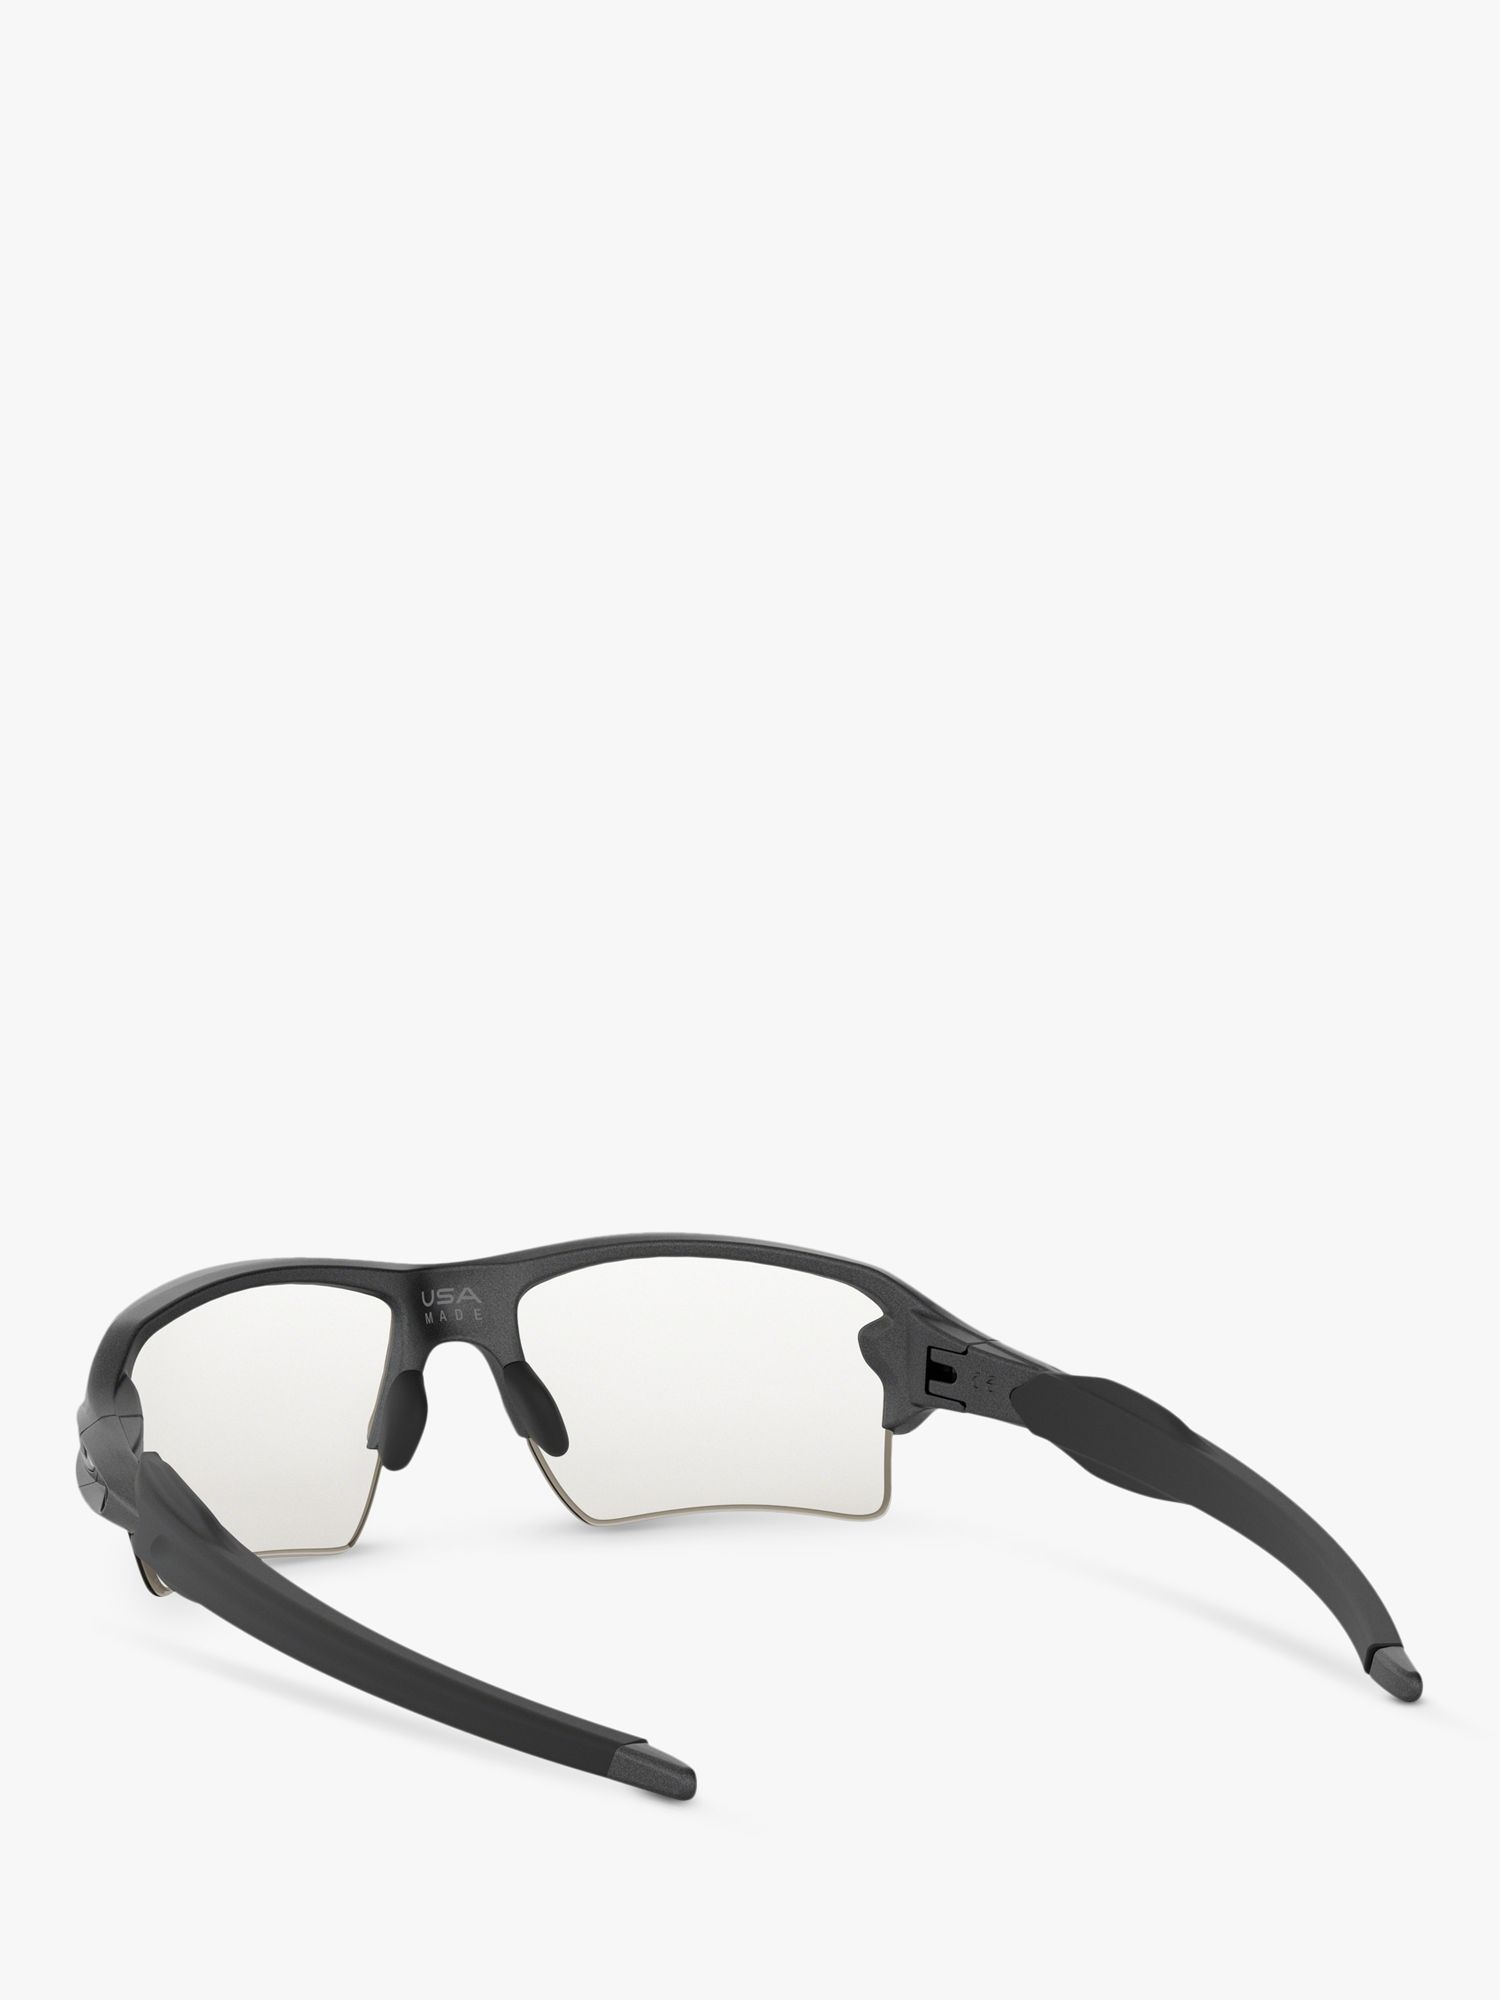 Buy Oakley OO9188 Men's Flak 2.0 XL Rectangular Sunglasses, Grey/Clear Online at johnlewis.com